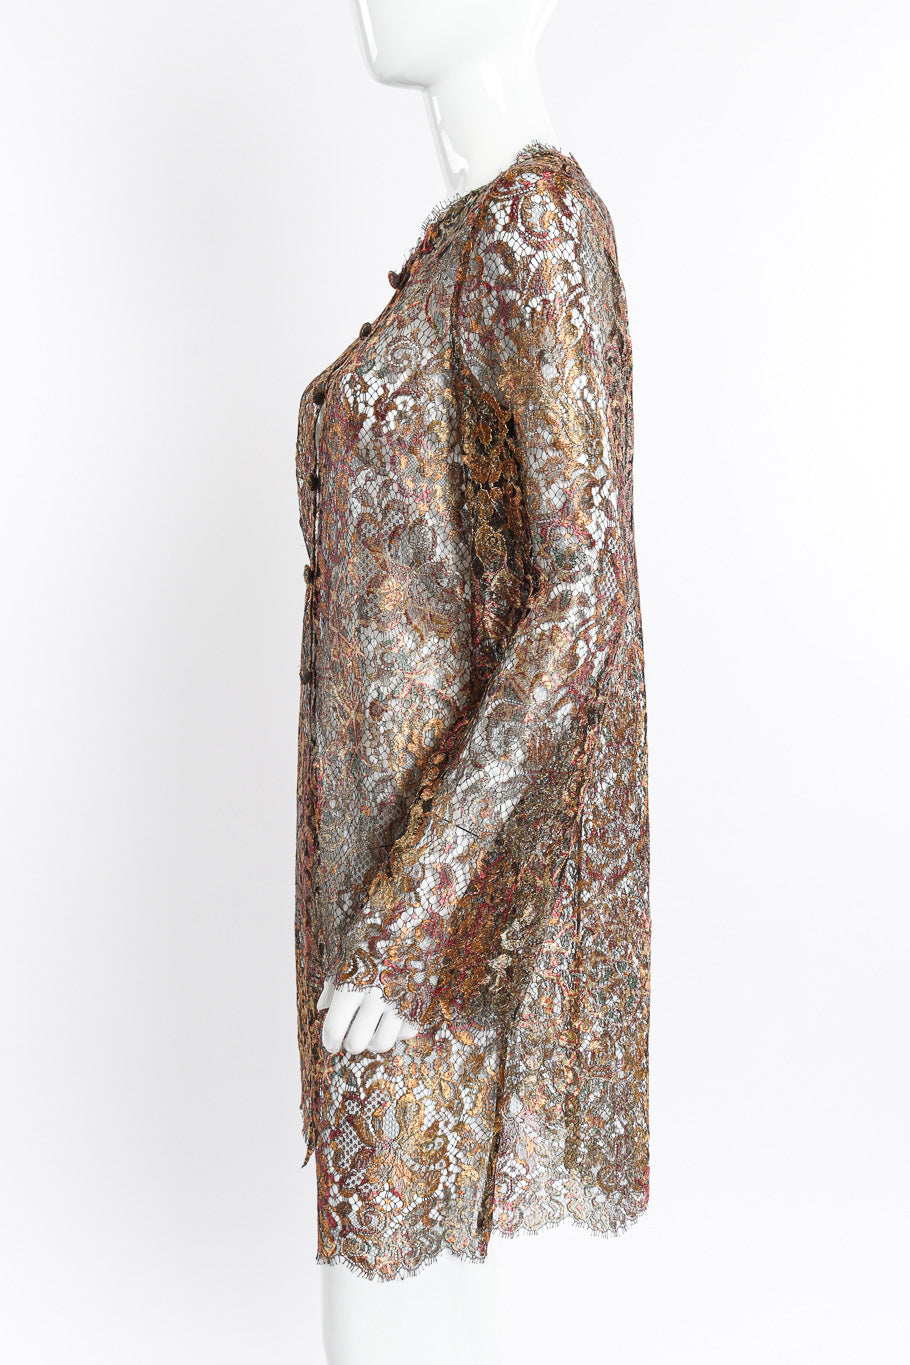 Vintage Bill Blass Lace Jacket side on mannequin closeup @recessla